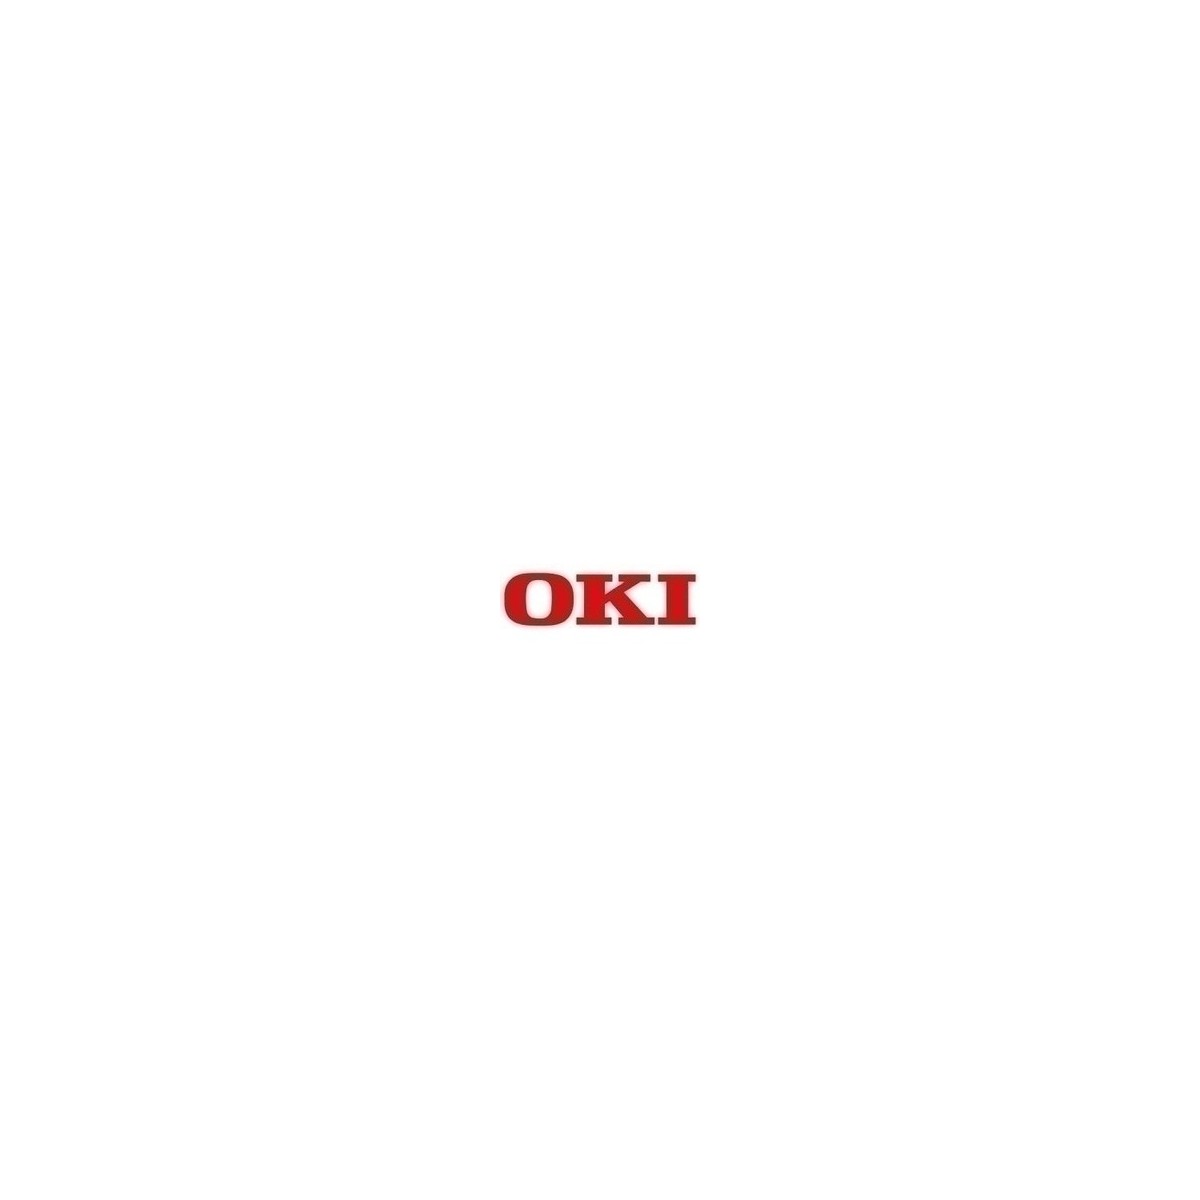 OKI 01116518 - Original - ES1624 - 17000 pages - Laser printing - Magenta